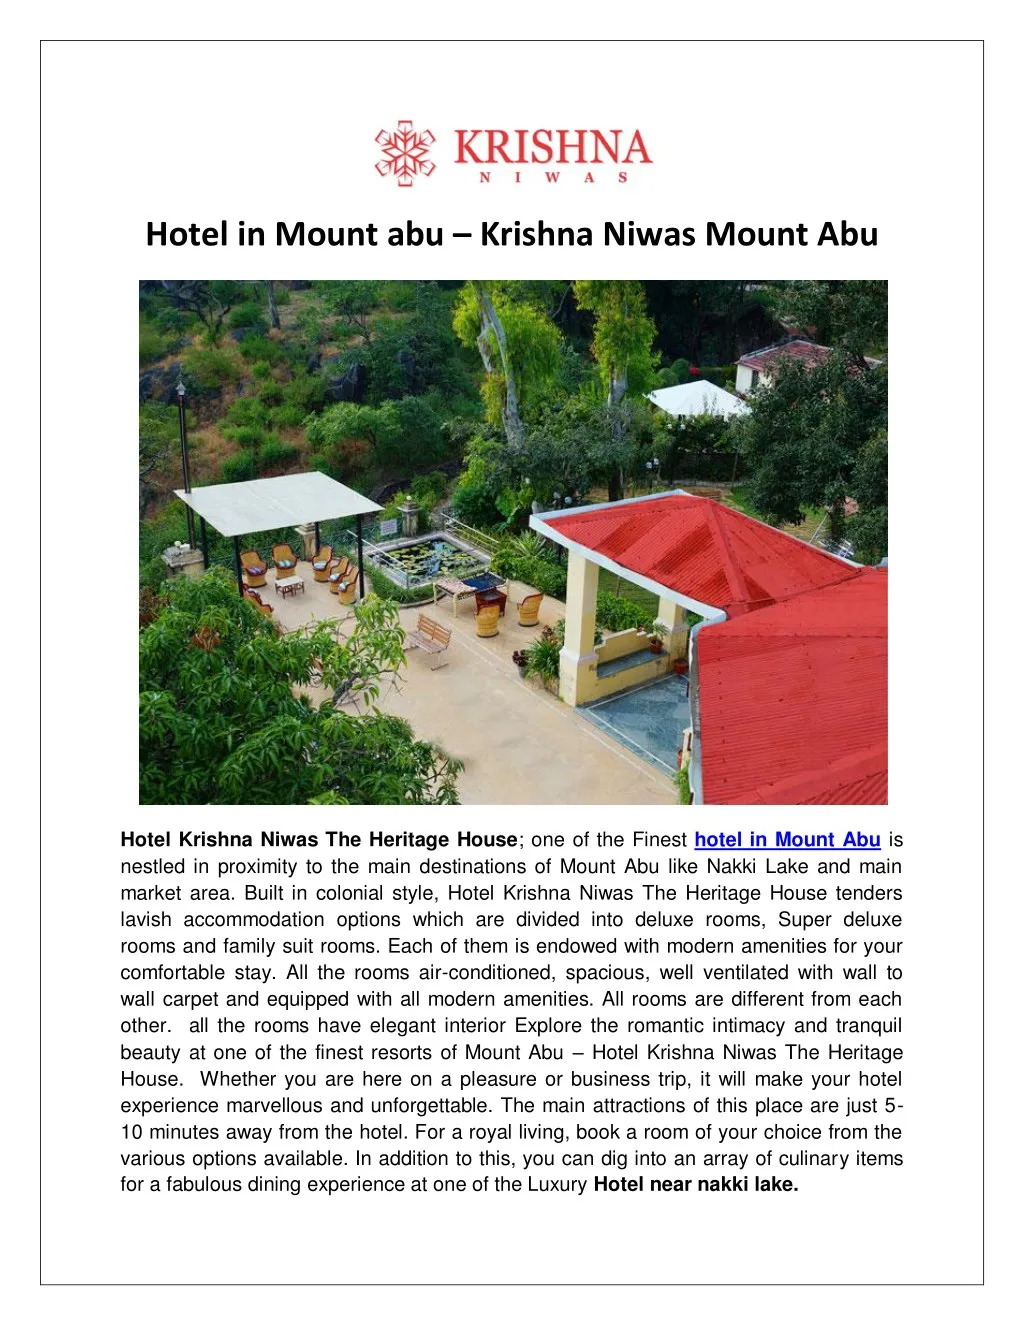 hotel in mount abu krishna niwas mount abu